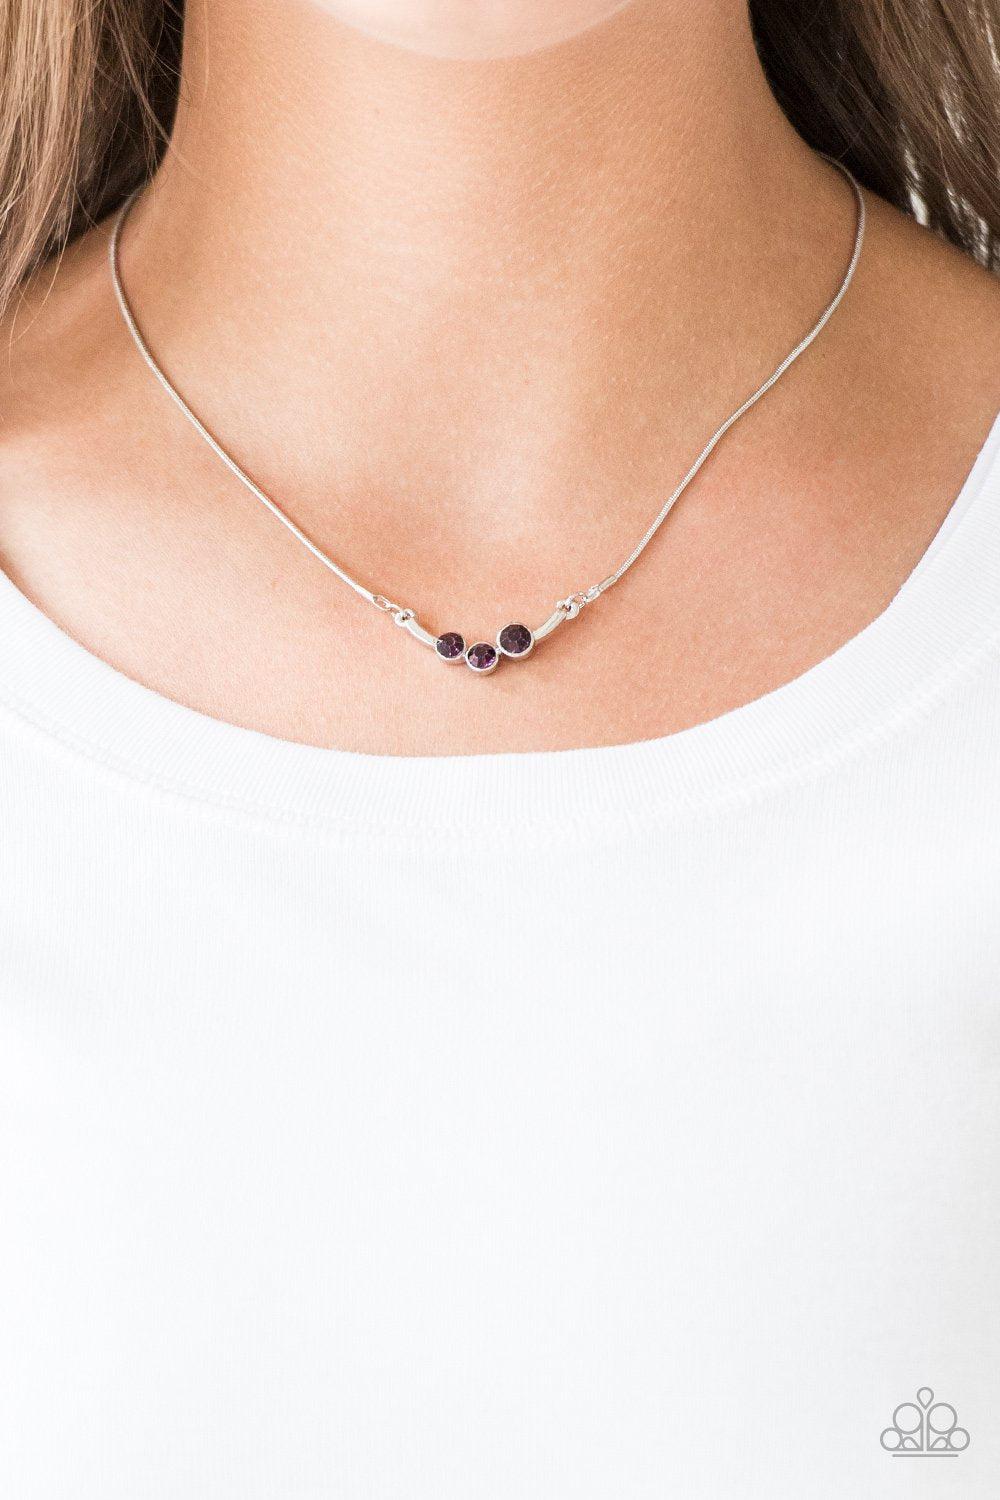 Sparkling Stargazer Purple Rhinestone Necklace - Paparazzi Accessories-CarasShop.com - $5 Jewelry by Cara Jewels